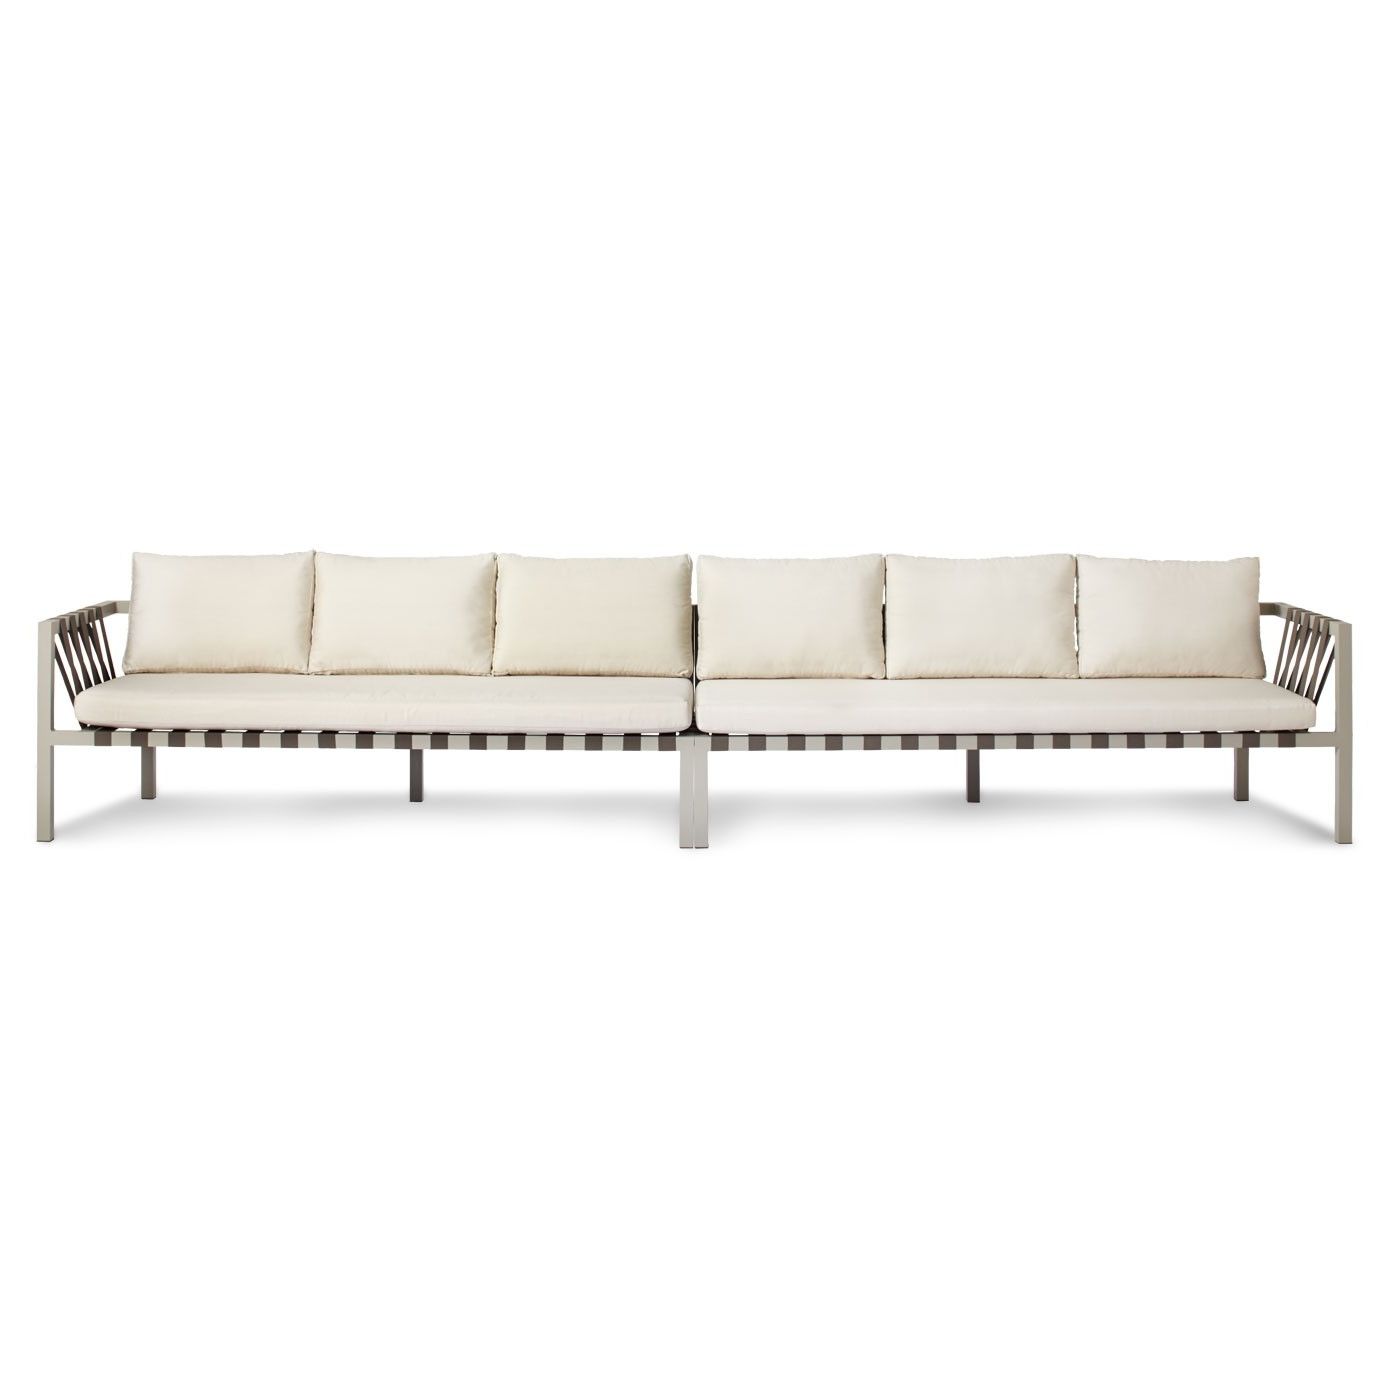 Sofa: Long Modern Sofa Intended For 2019 Long Modern Sofas (View 3 of 20)